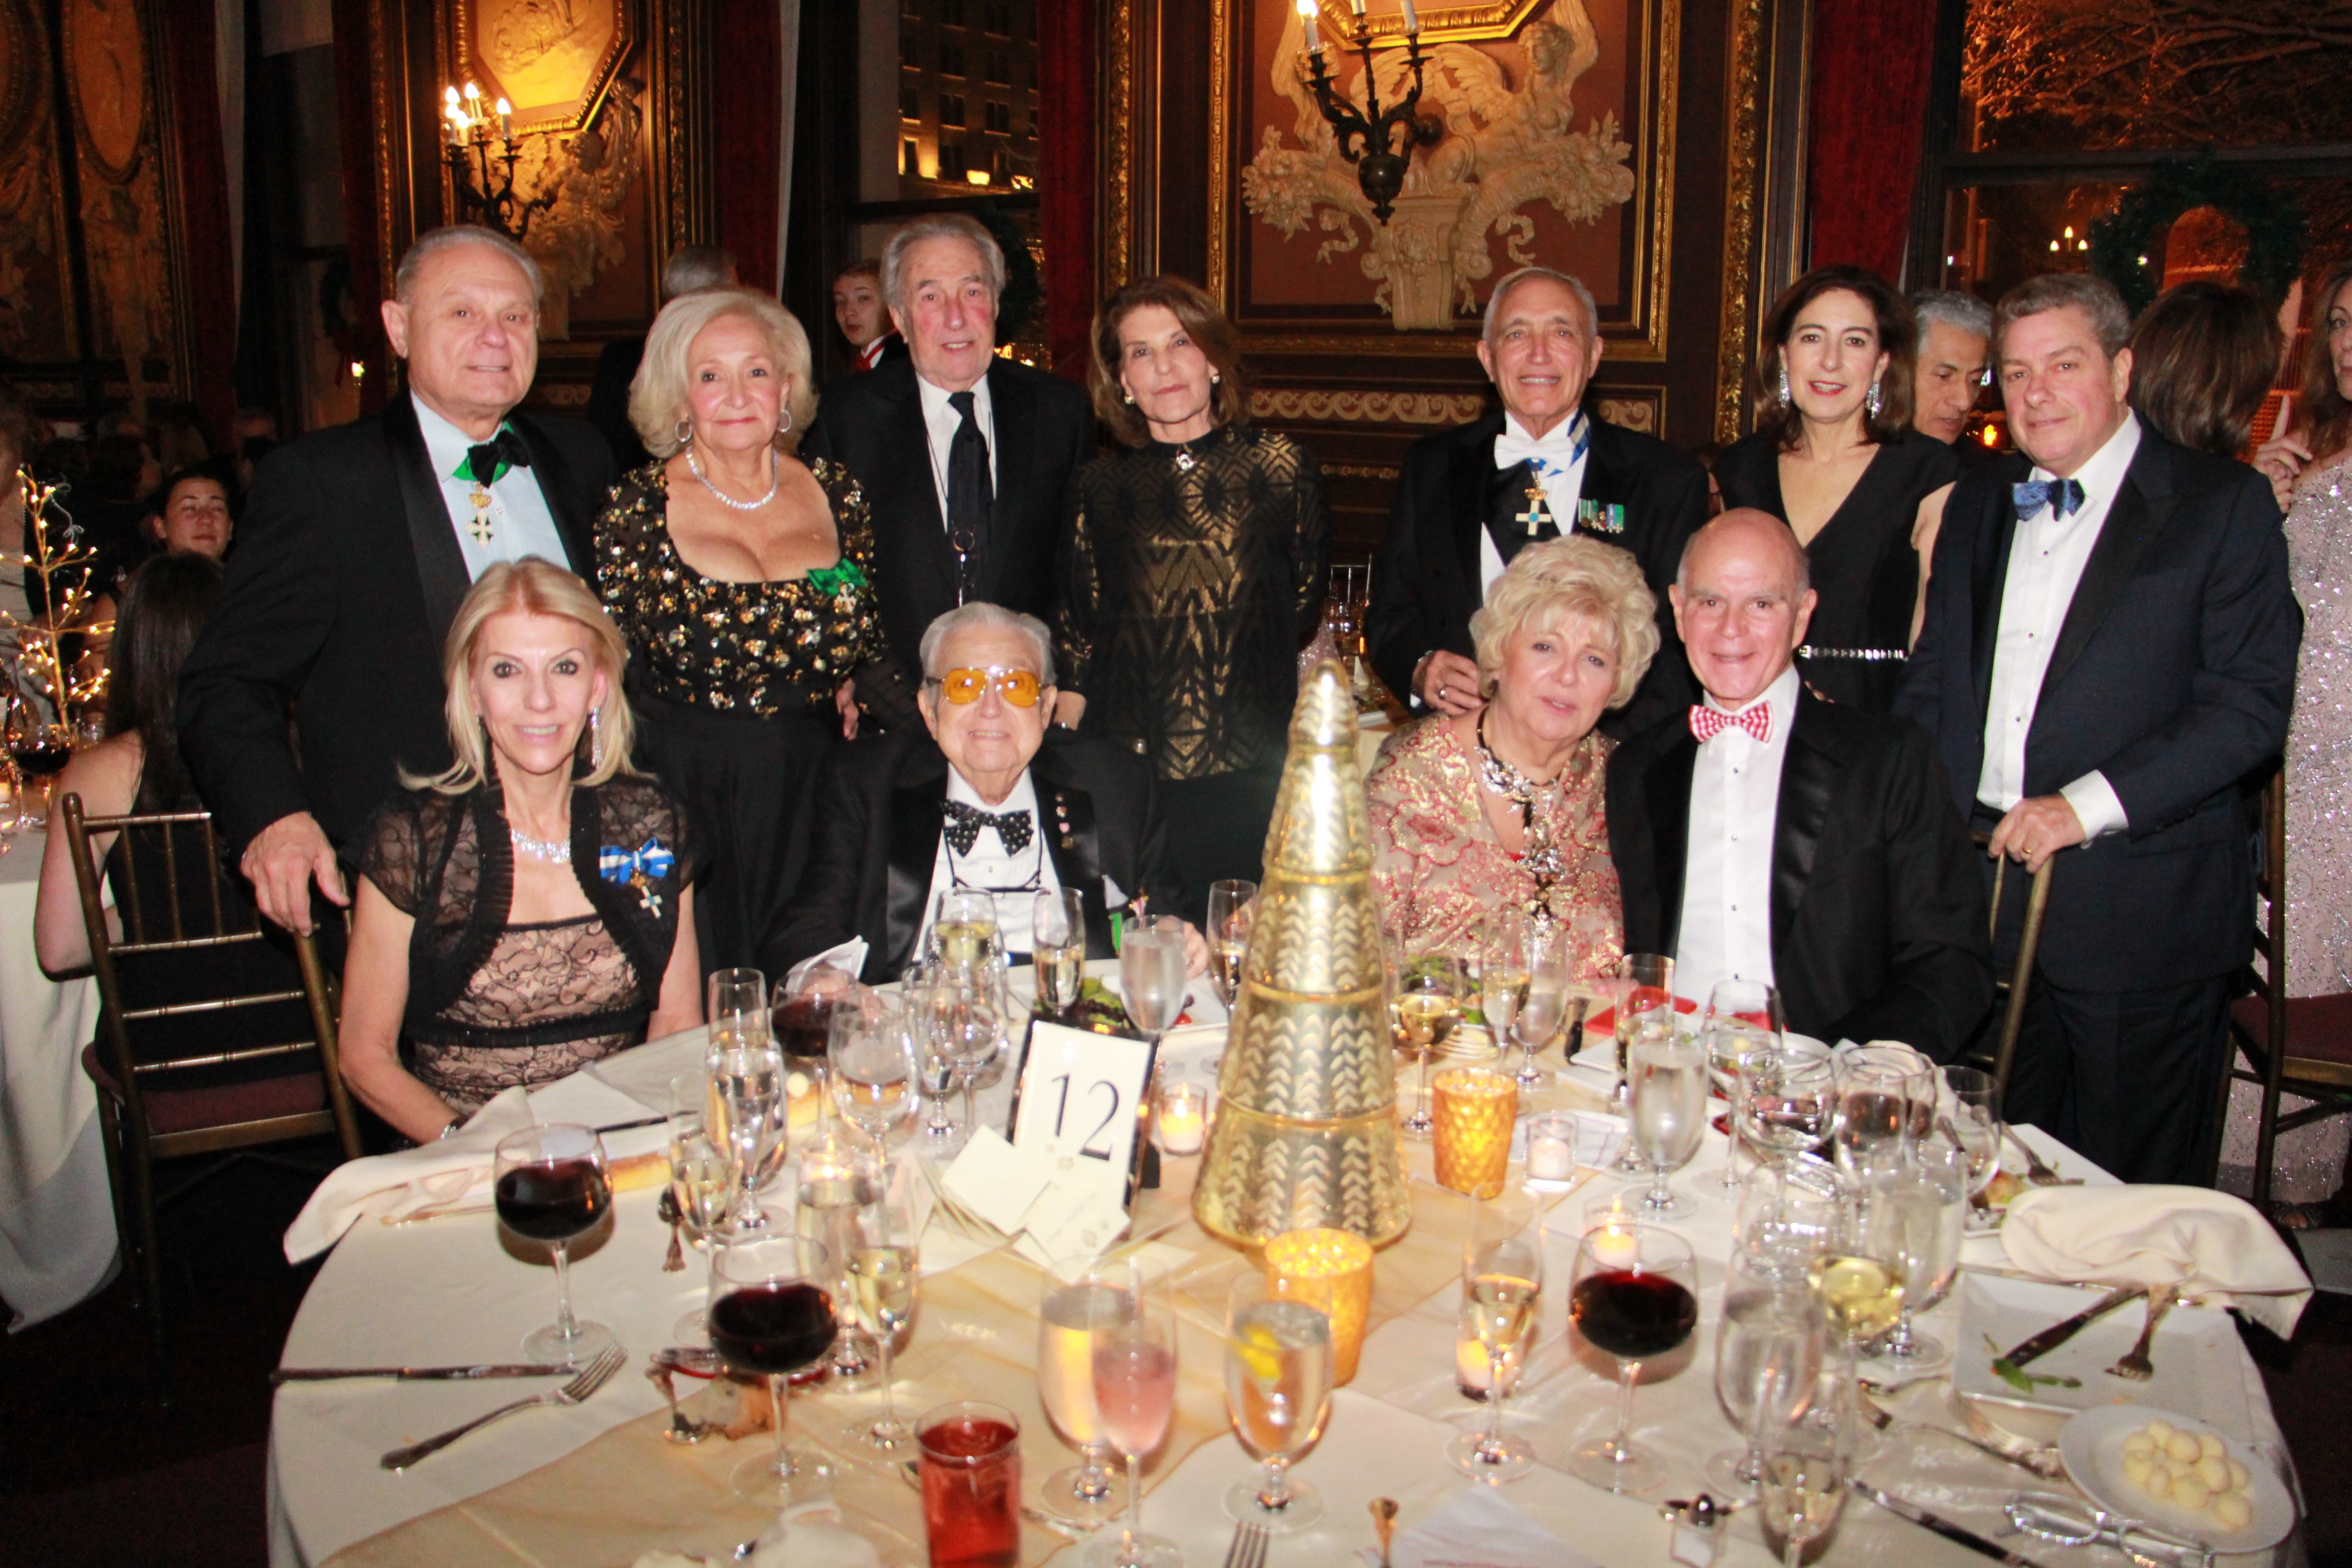 Table of Savoy Ball Patron Ms. Vivian Cardia, seated far left